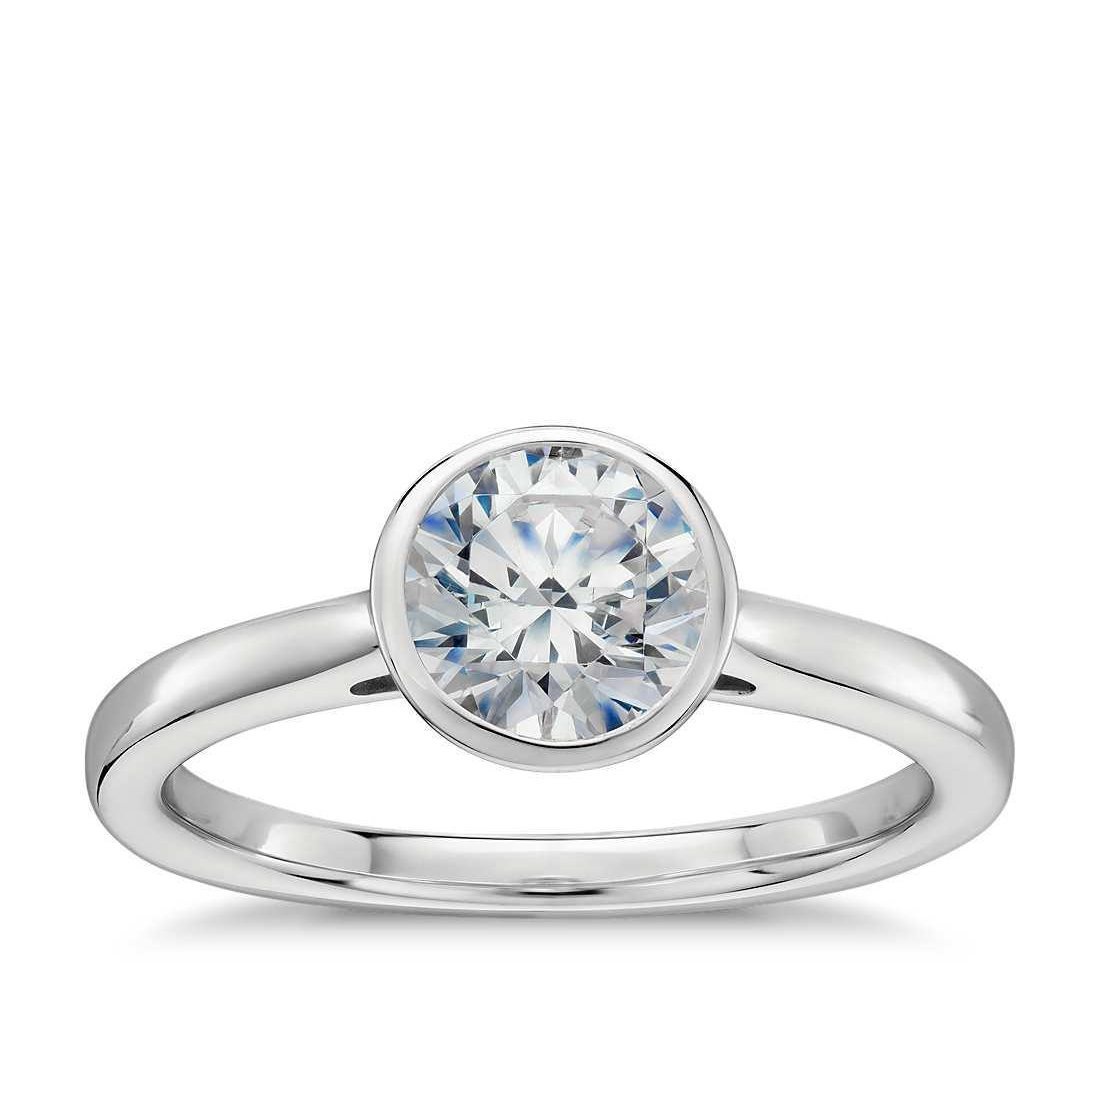 Picture of Harry Chad Enterprises 20584 Bezel Set Solitaire 1.50 CT Diamond Engagement Ring, 14K White Gold - Size 6.5